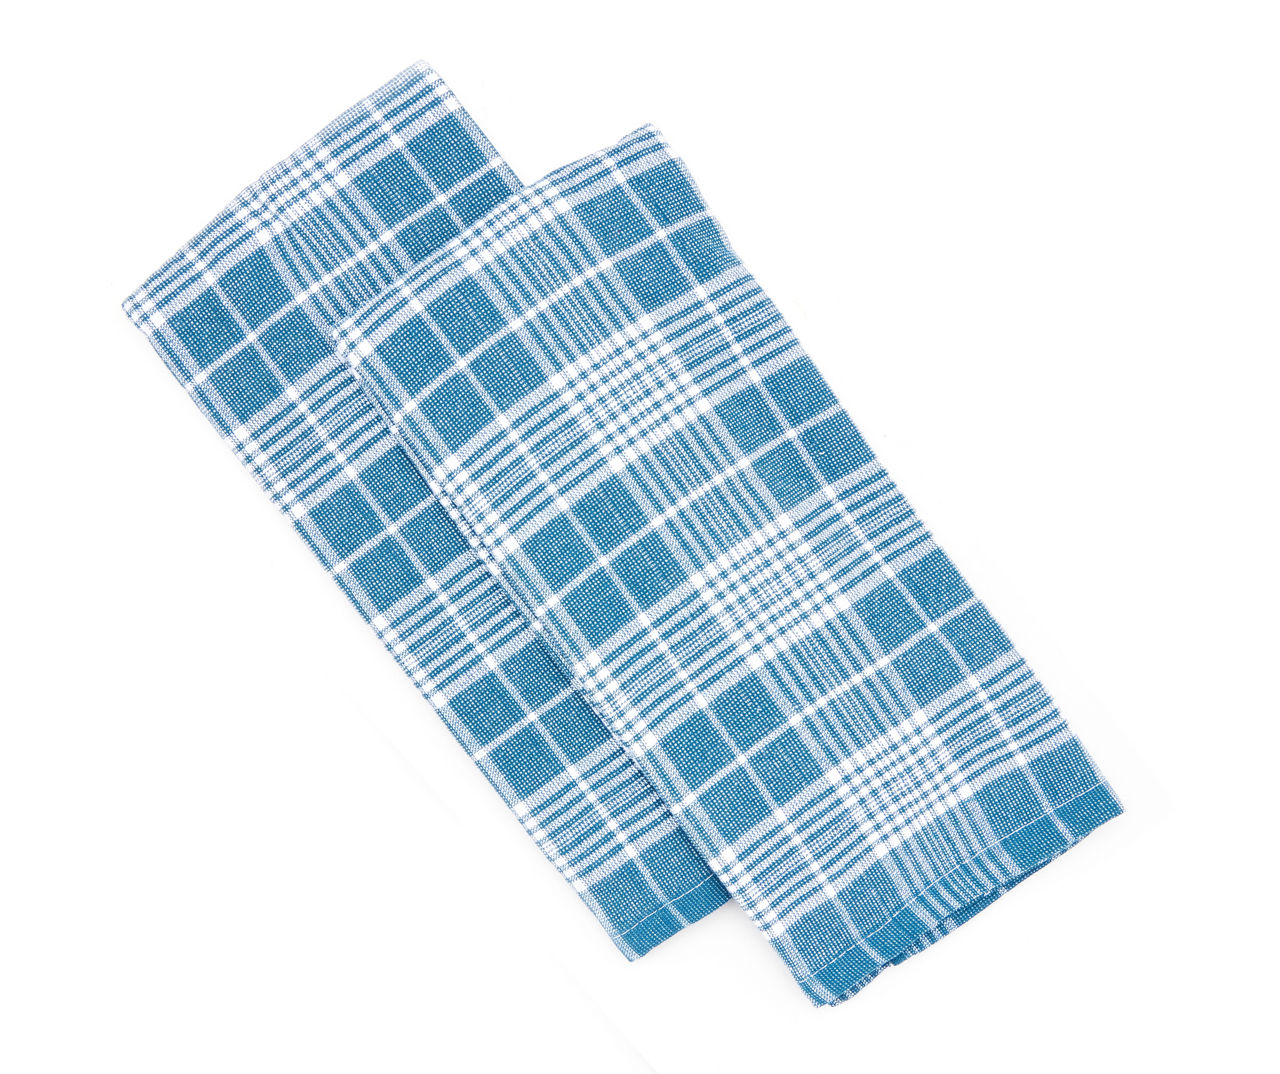 CUISINART KITCHEN TOWELS (2) BLUE WHITE STRIPES 16 X 28 100% COTTON NIP